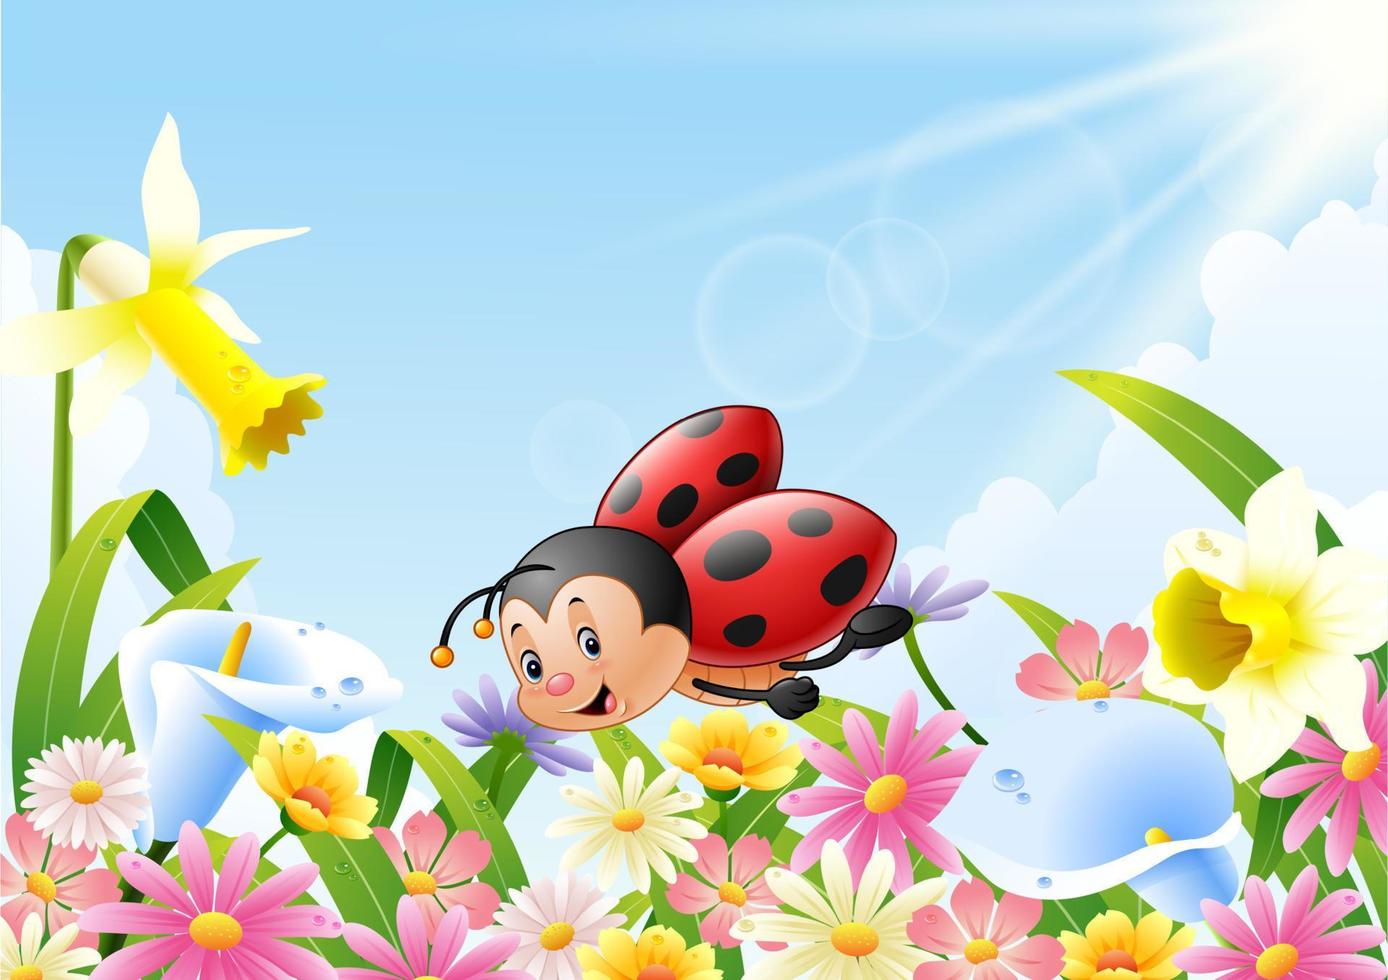 Cartoon funny ladybug flying over flower field vector